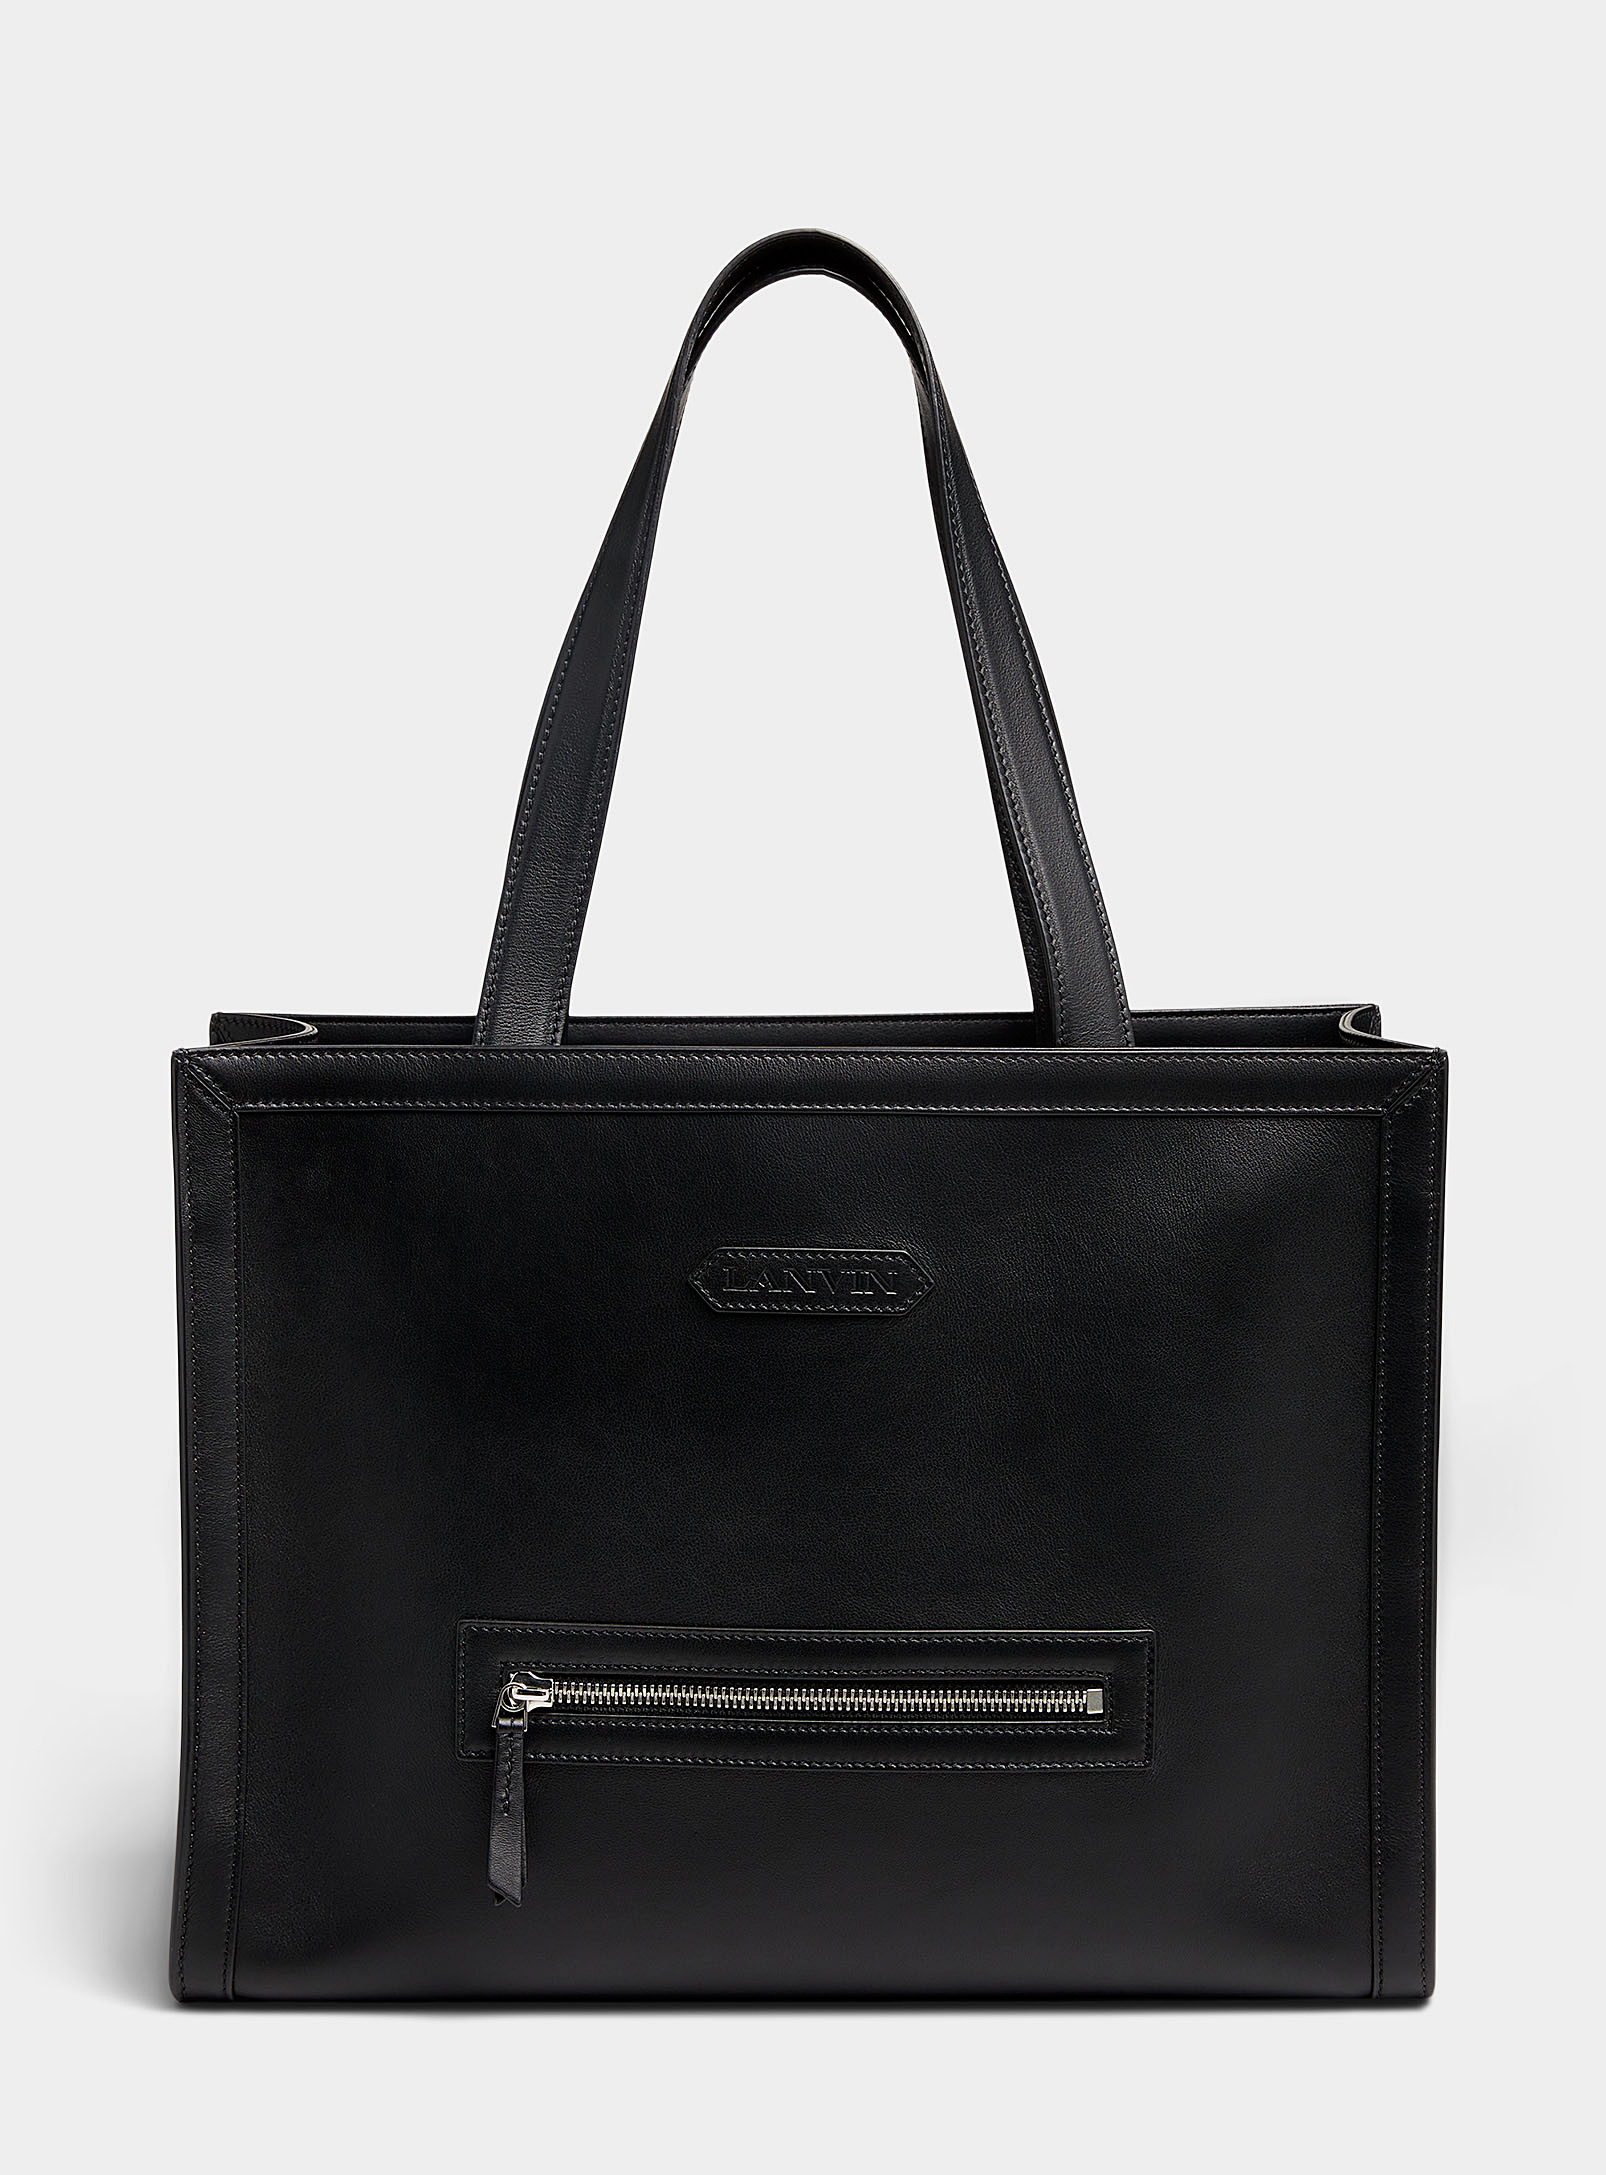 Lanvin - Men's Tenor black leather handbag